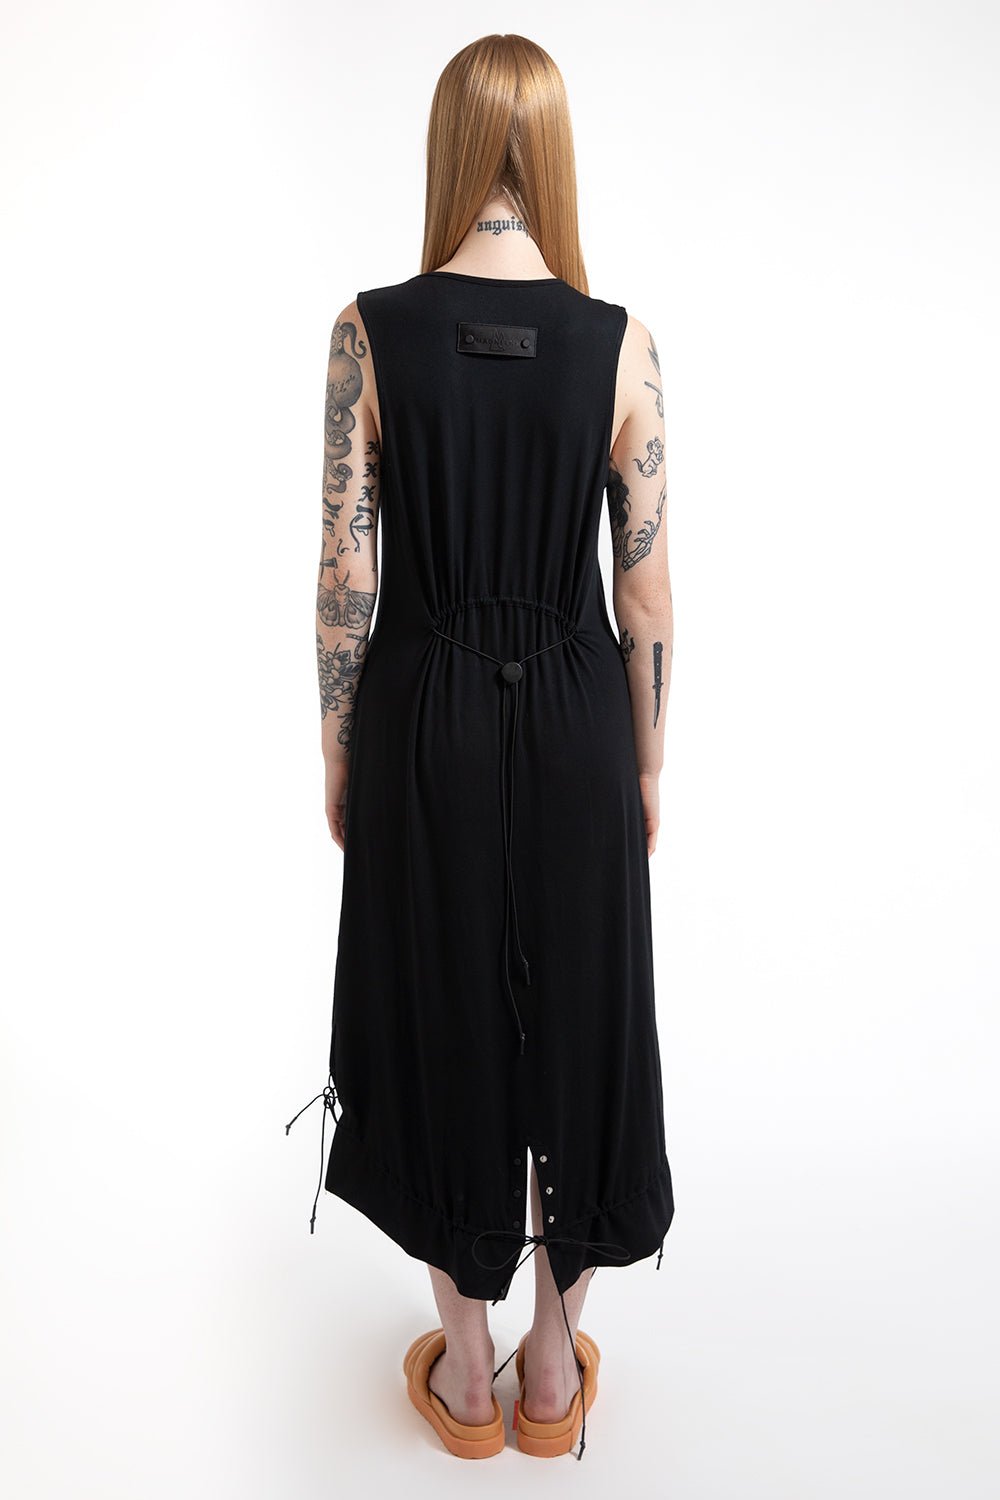 Acari Adjustable Jersey Dress - Magnlens